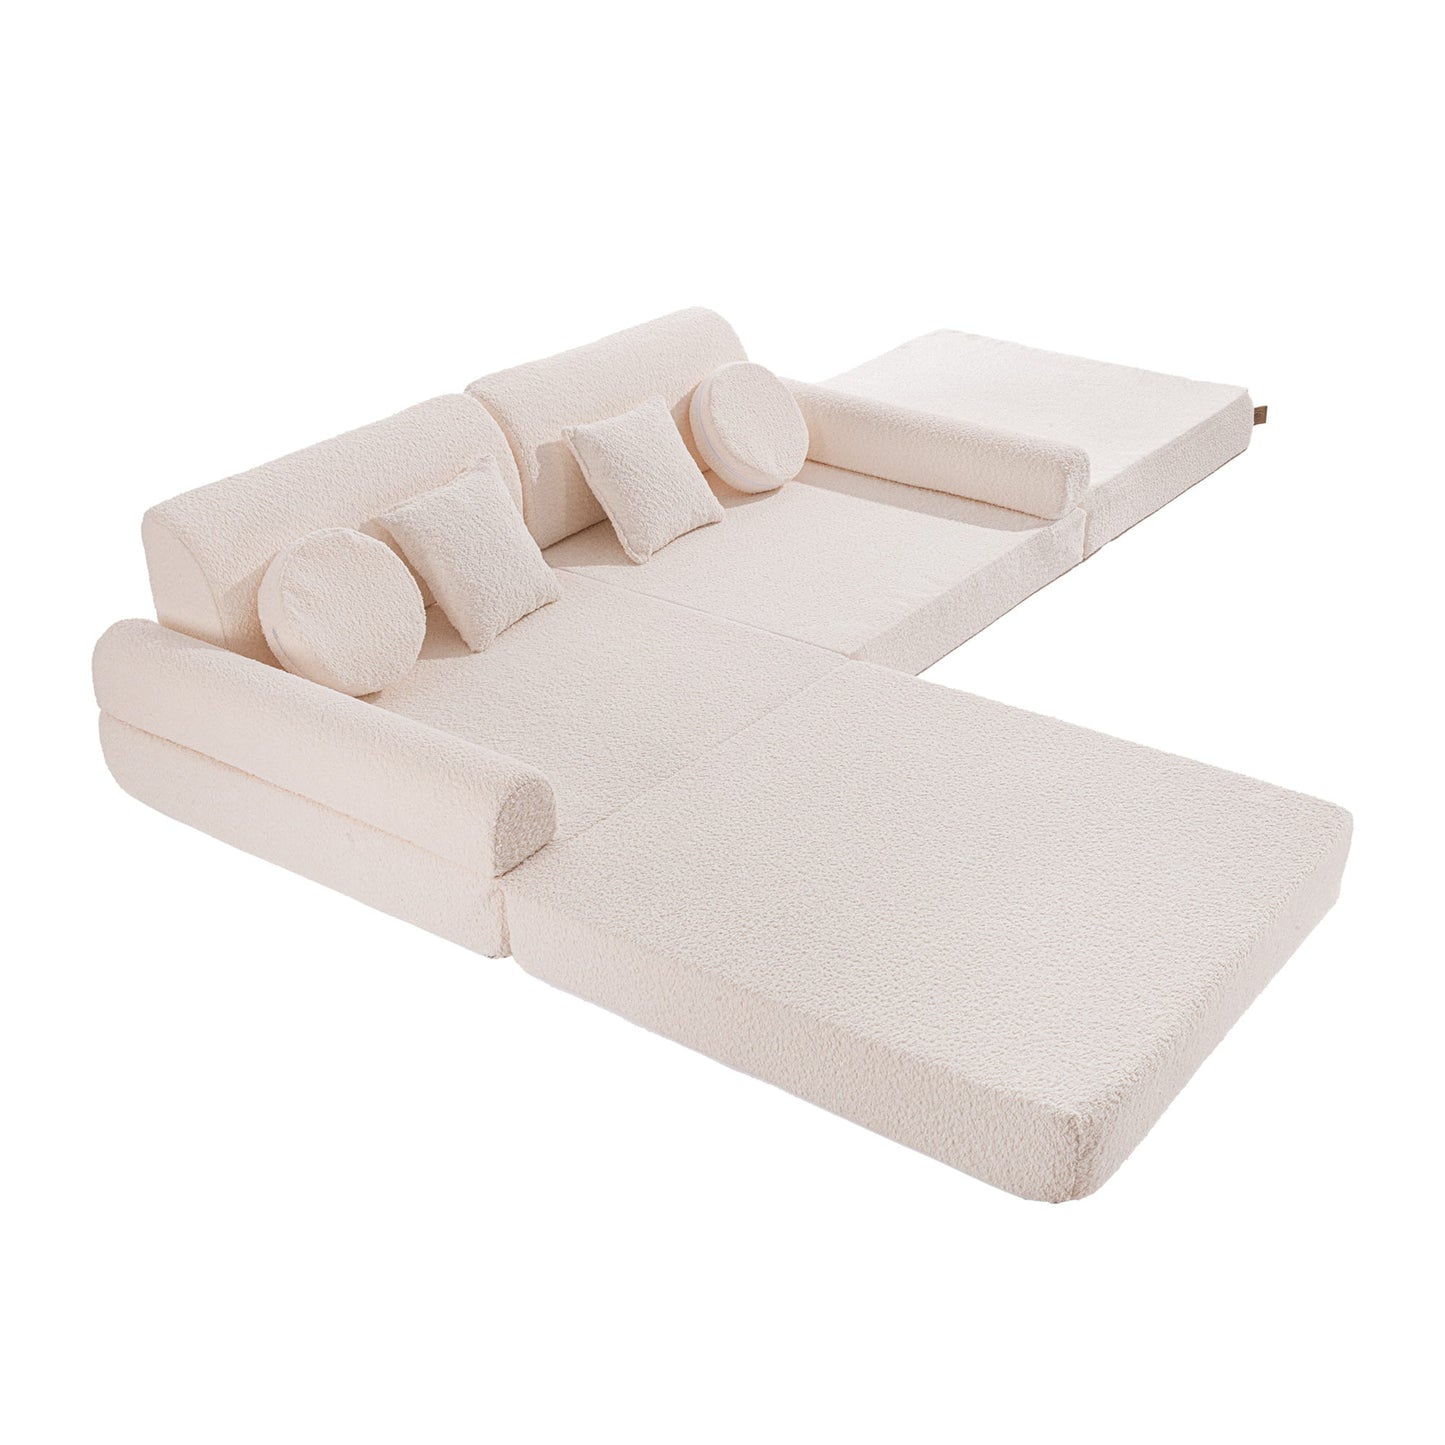 Boucle Modular Soft Play Sofa